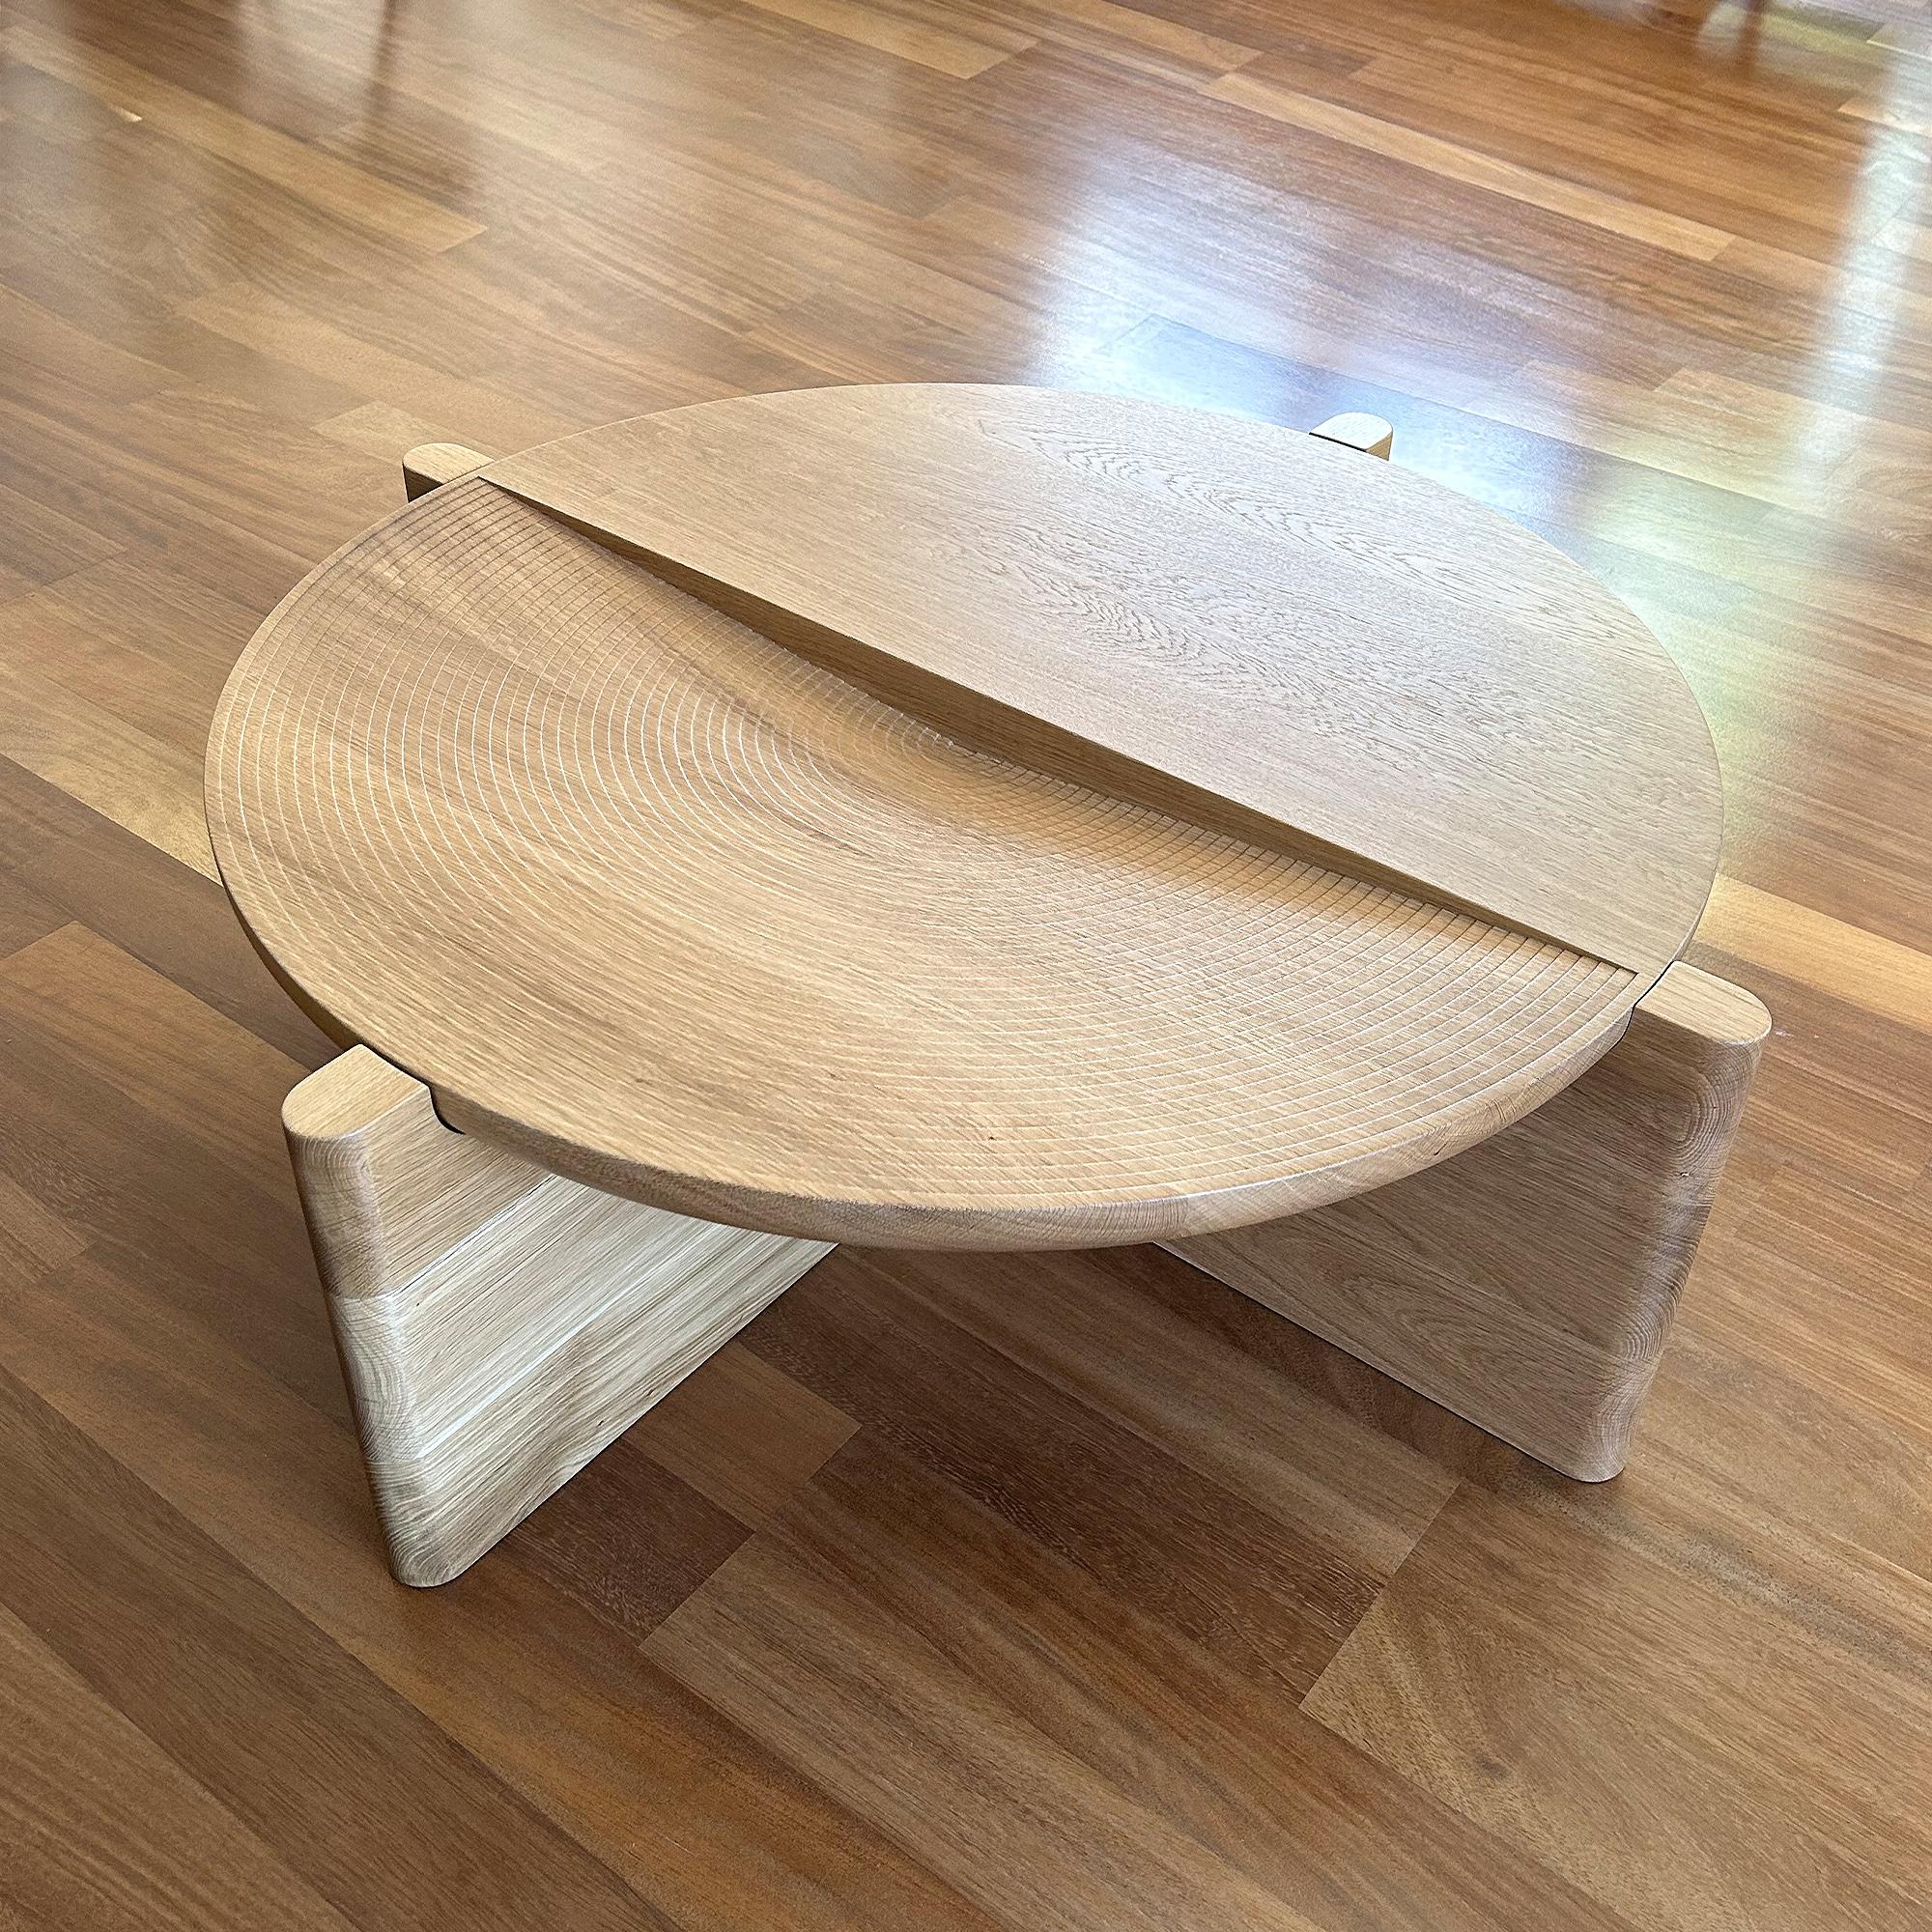 Turkish Arkhe Coffee Table in Solid Oak, Modern Sculptural Round by Fulden Topaloglu For Sale